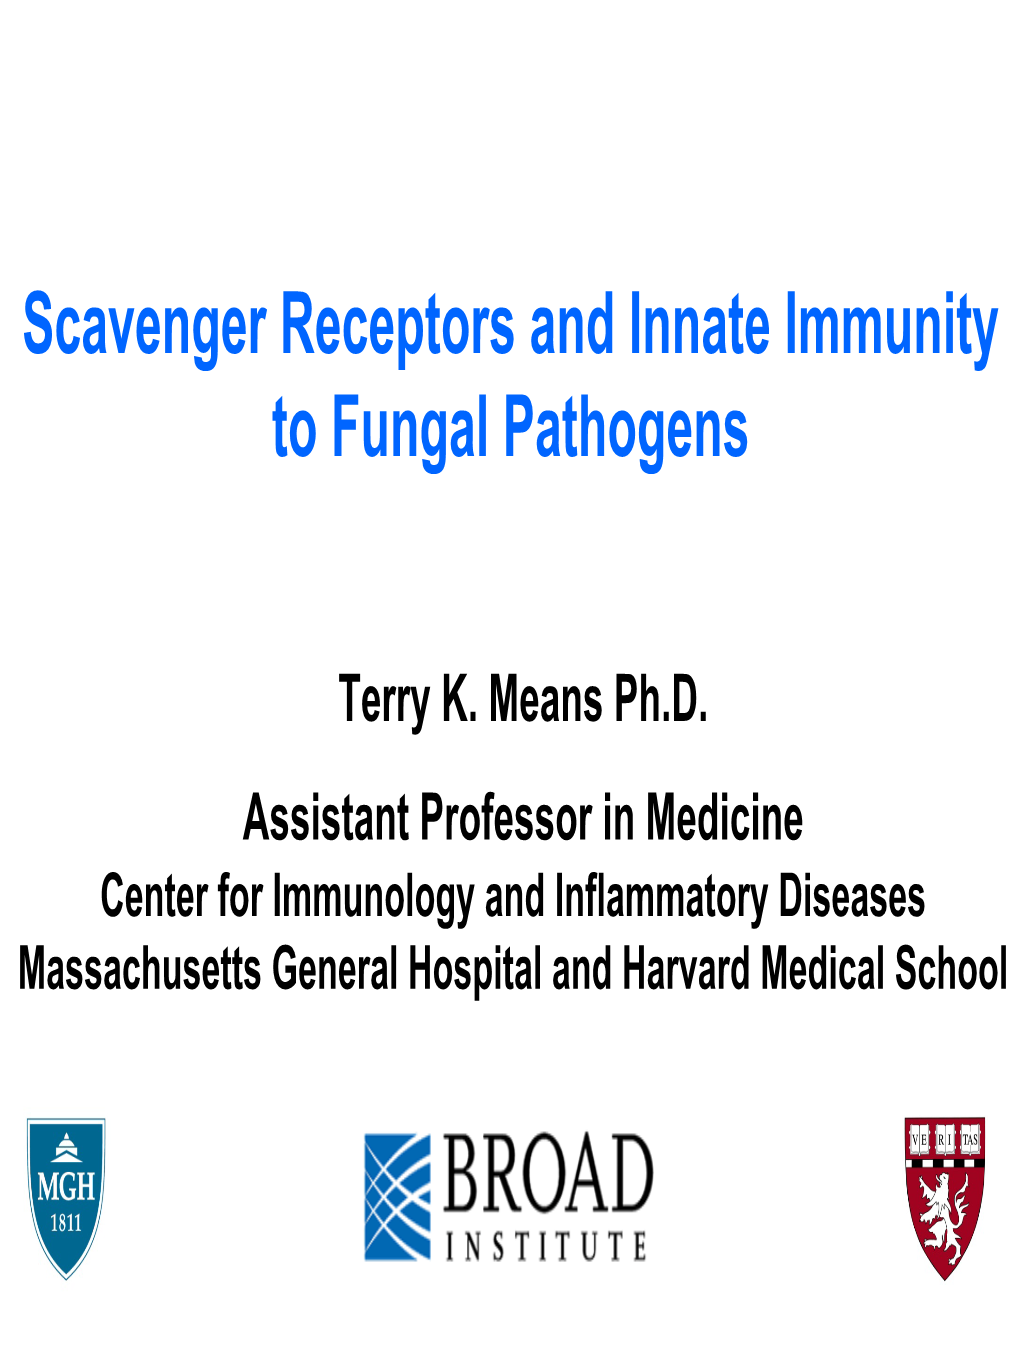 Scavenger Receptors and Innate Immunity to Fungal Pathogens